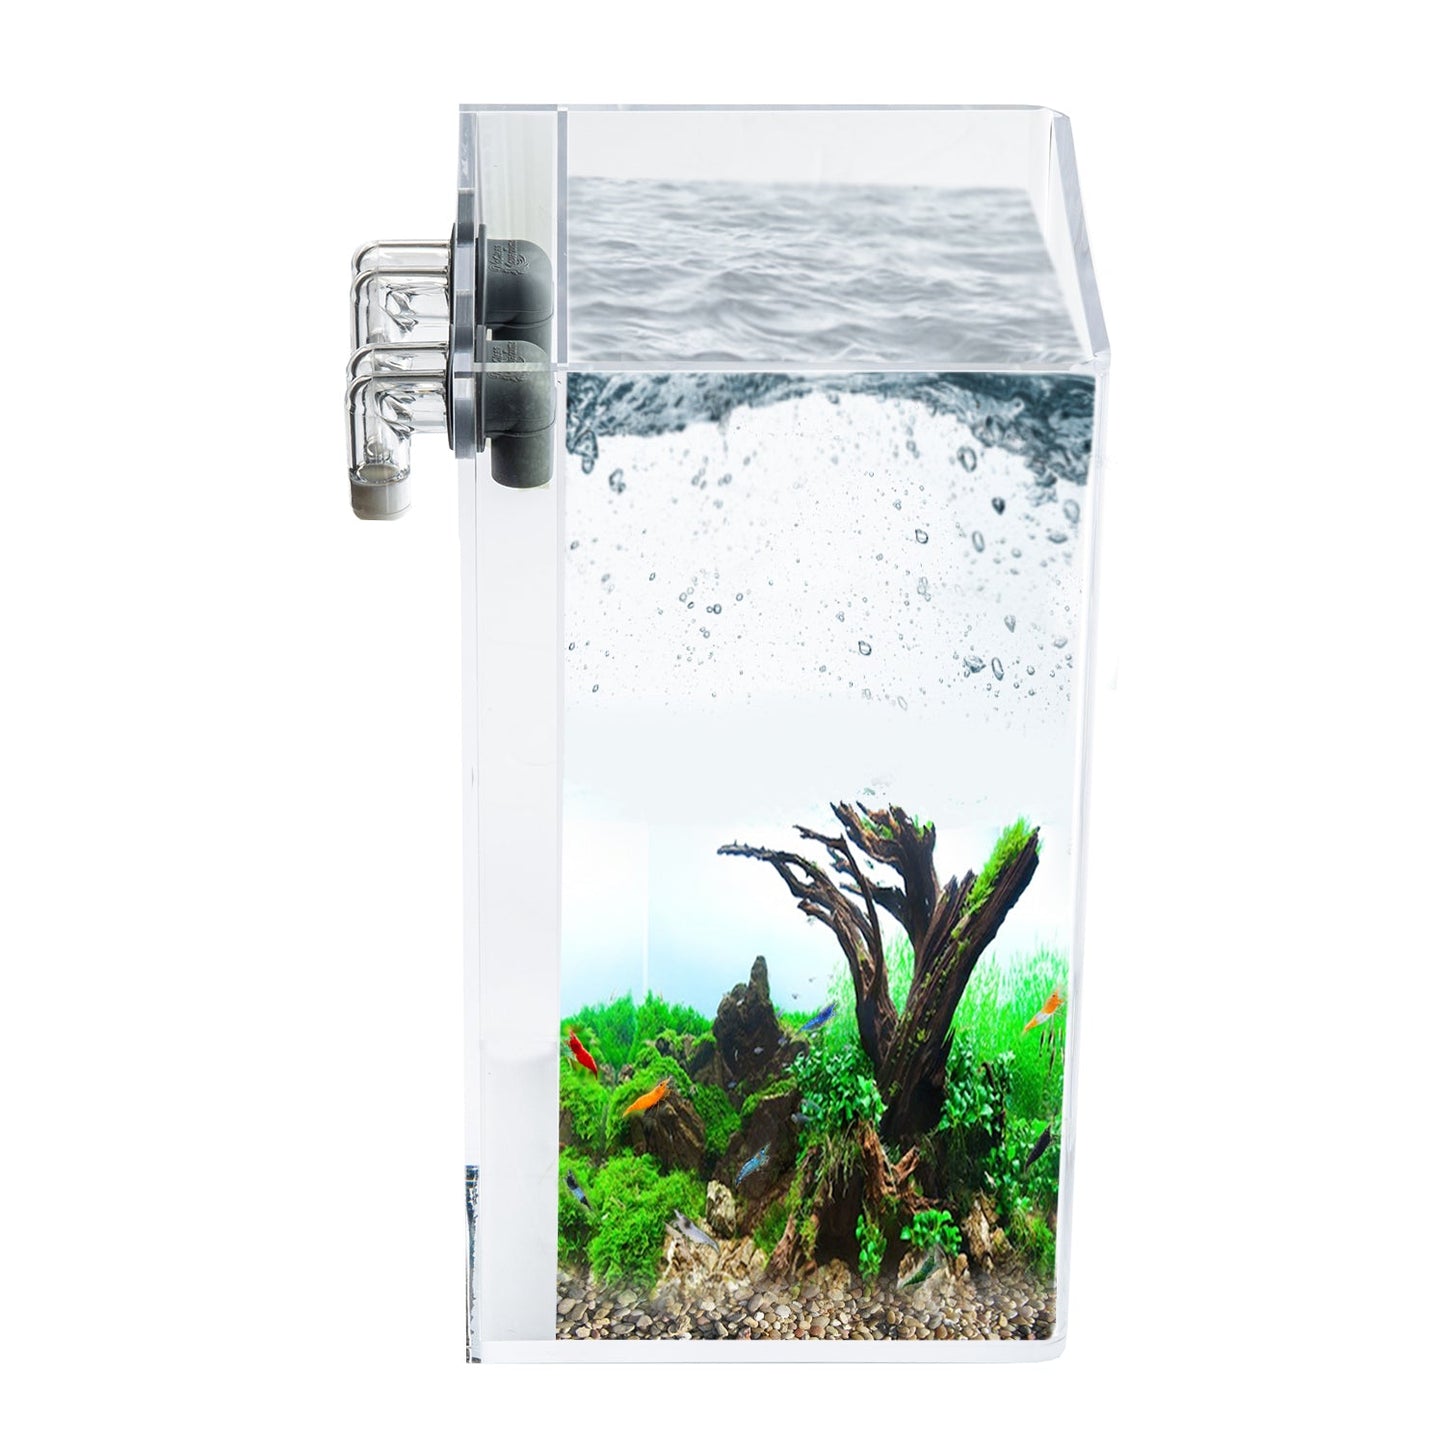 2.5 Gallon Tall Self-Cleaning Aquarium Kit | Lid | Waterfall Basin | Dazzle LED | Air Pump